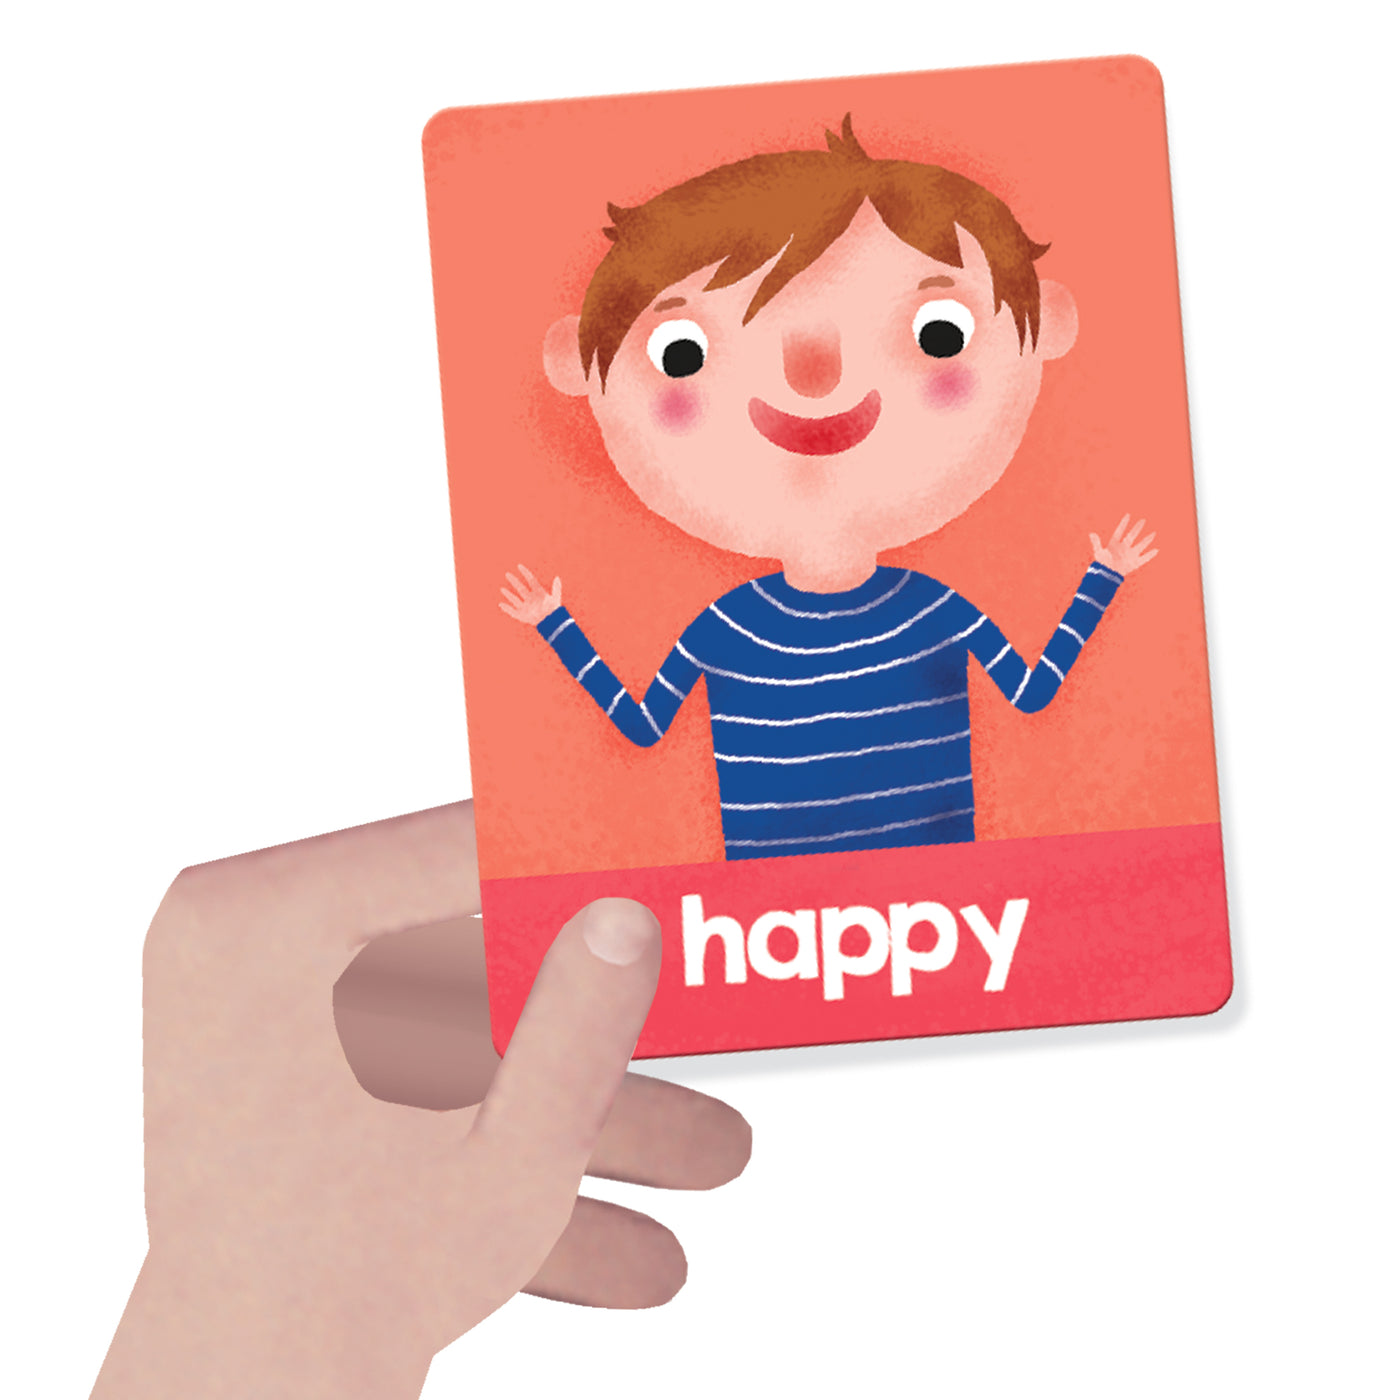 Flashcards: Emotions & Actions (Montessori)